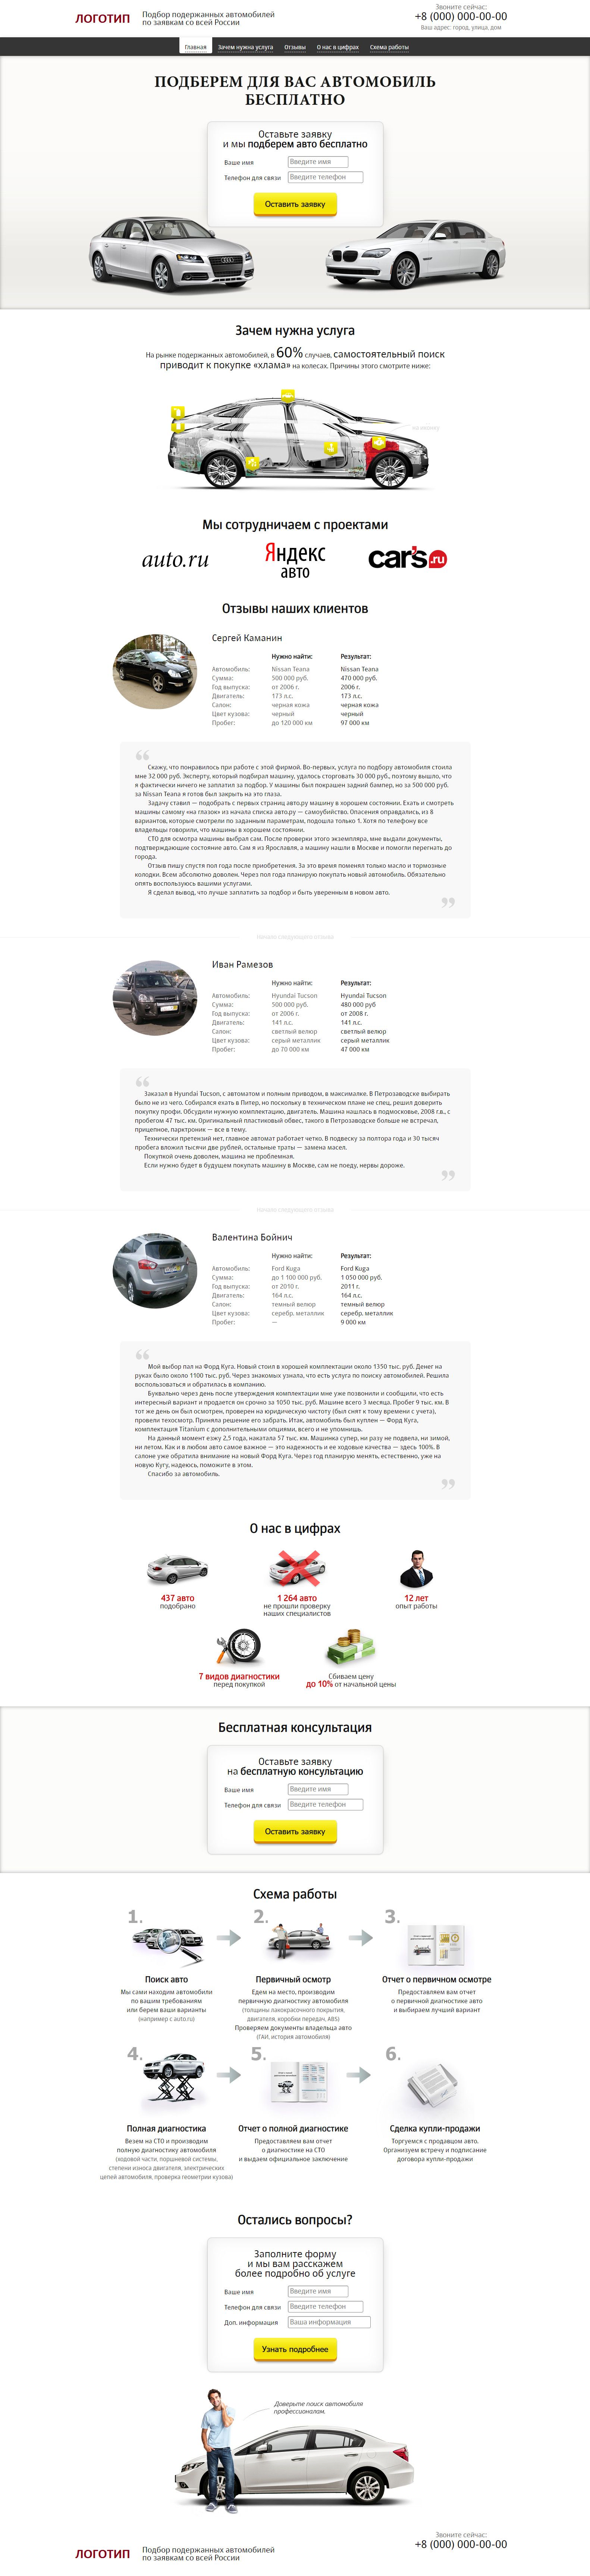 Landing page - Car selection